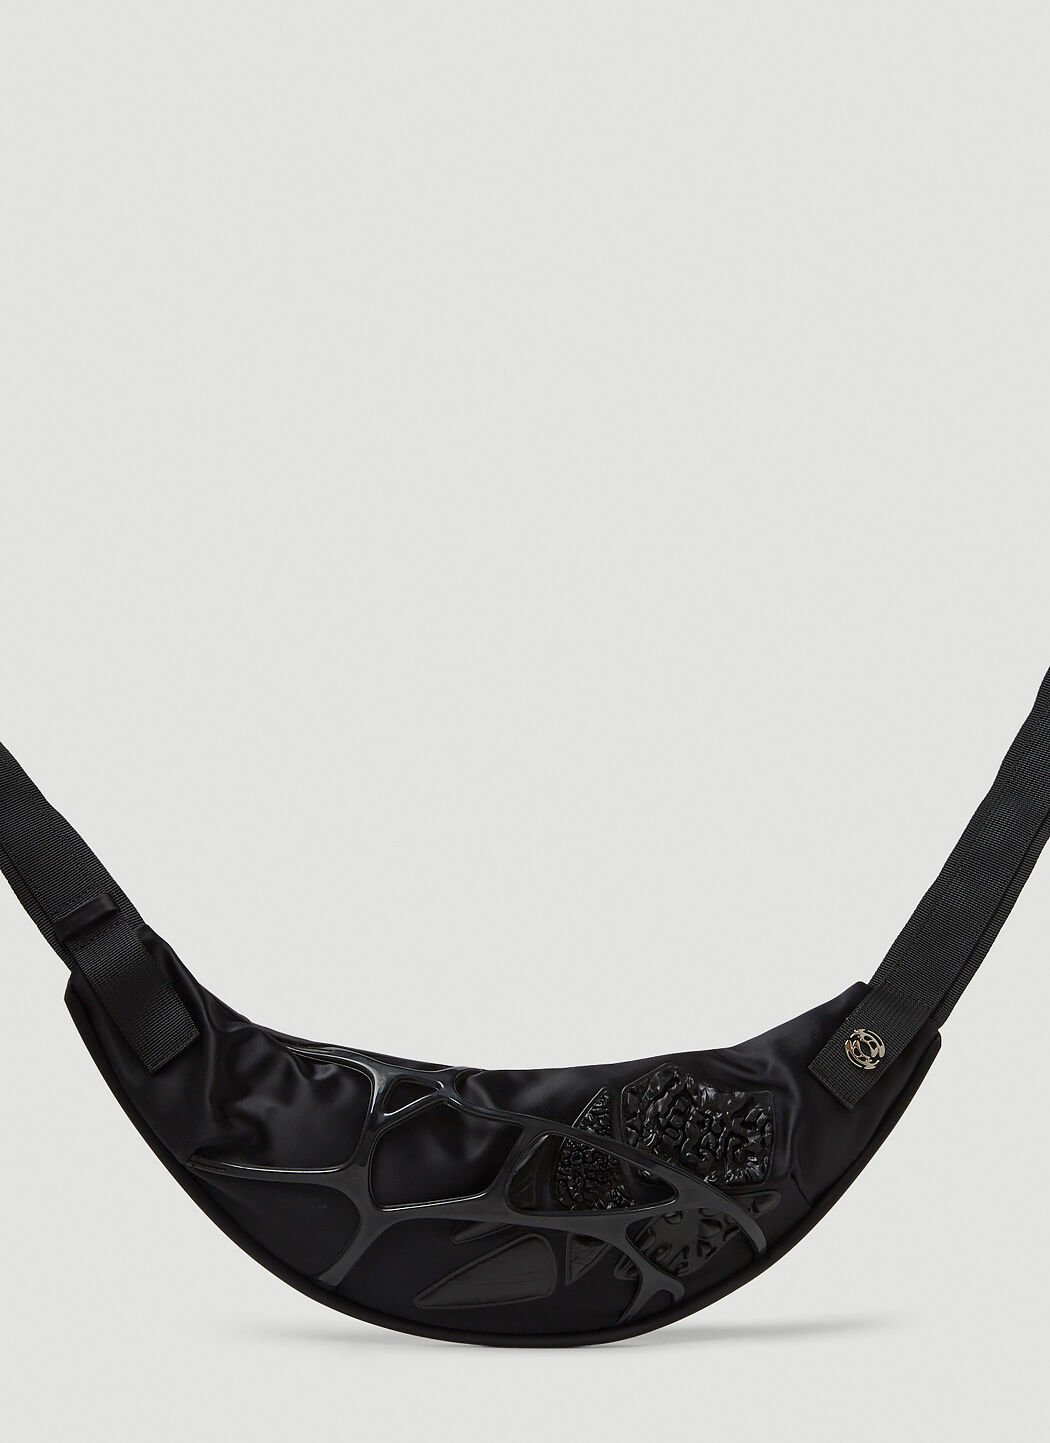 Marc Jacobs Neuro 2.0 Belt Bag Black mcj0255016